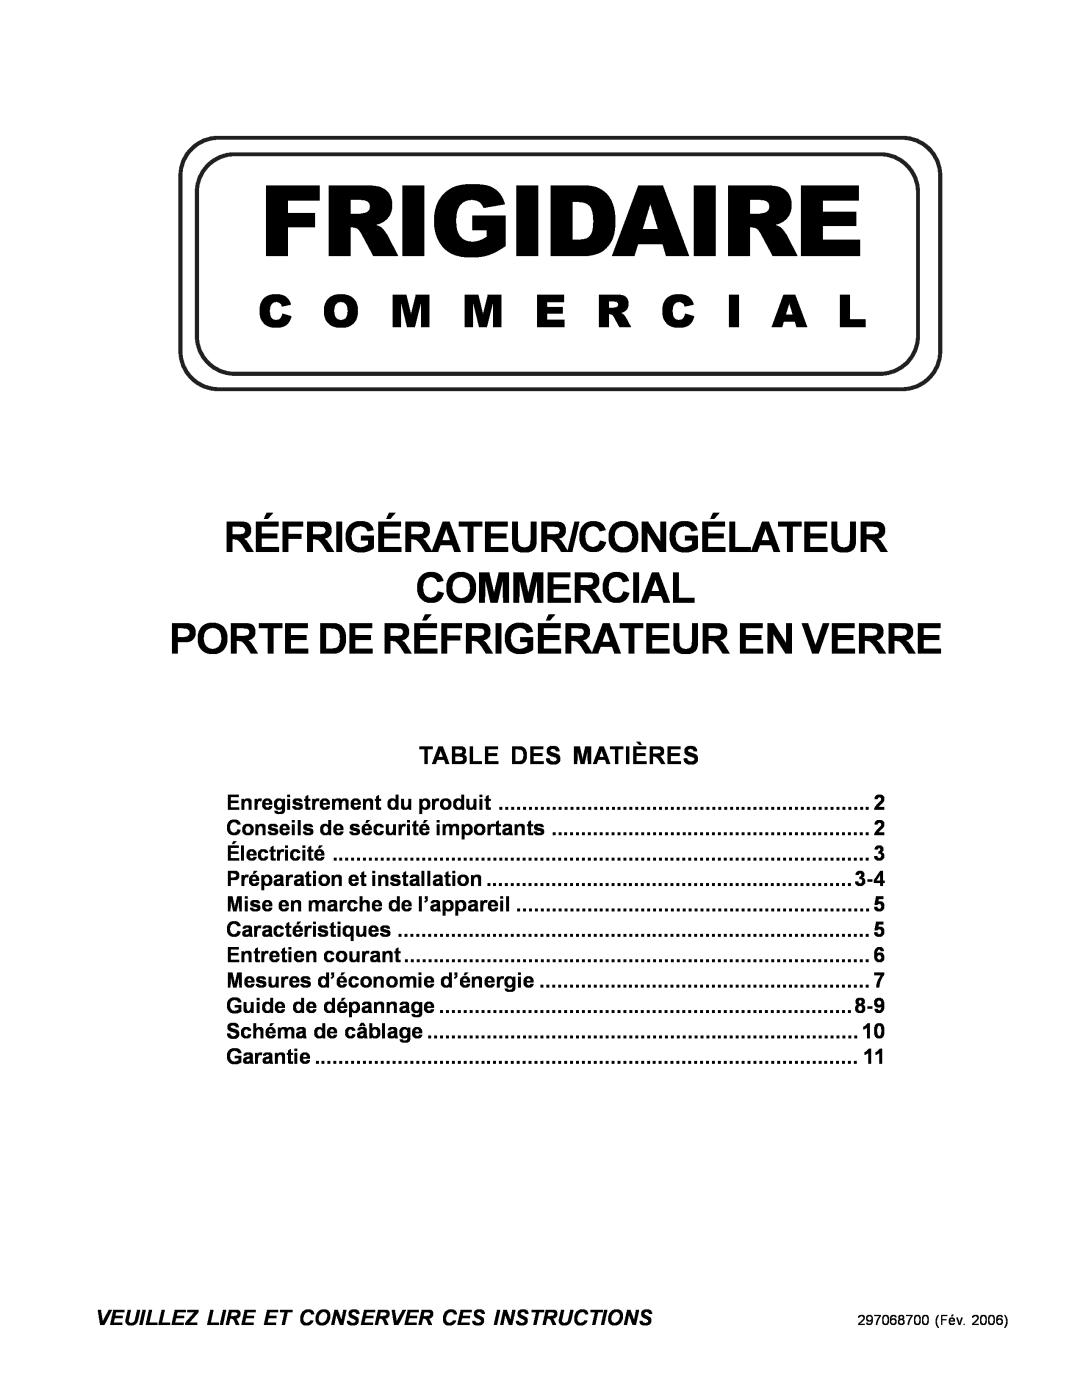 Frigidaire FREEZER/REFRIGERATOR GLASS DOOR REFRIGERATOR Table Des Matières, Veuillez Lire Et Conserver Ces Instructions 